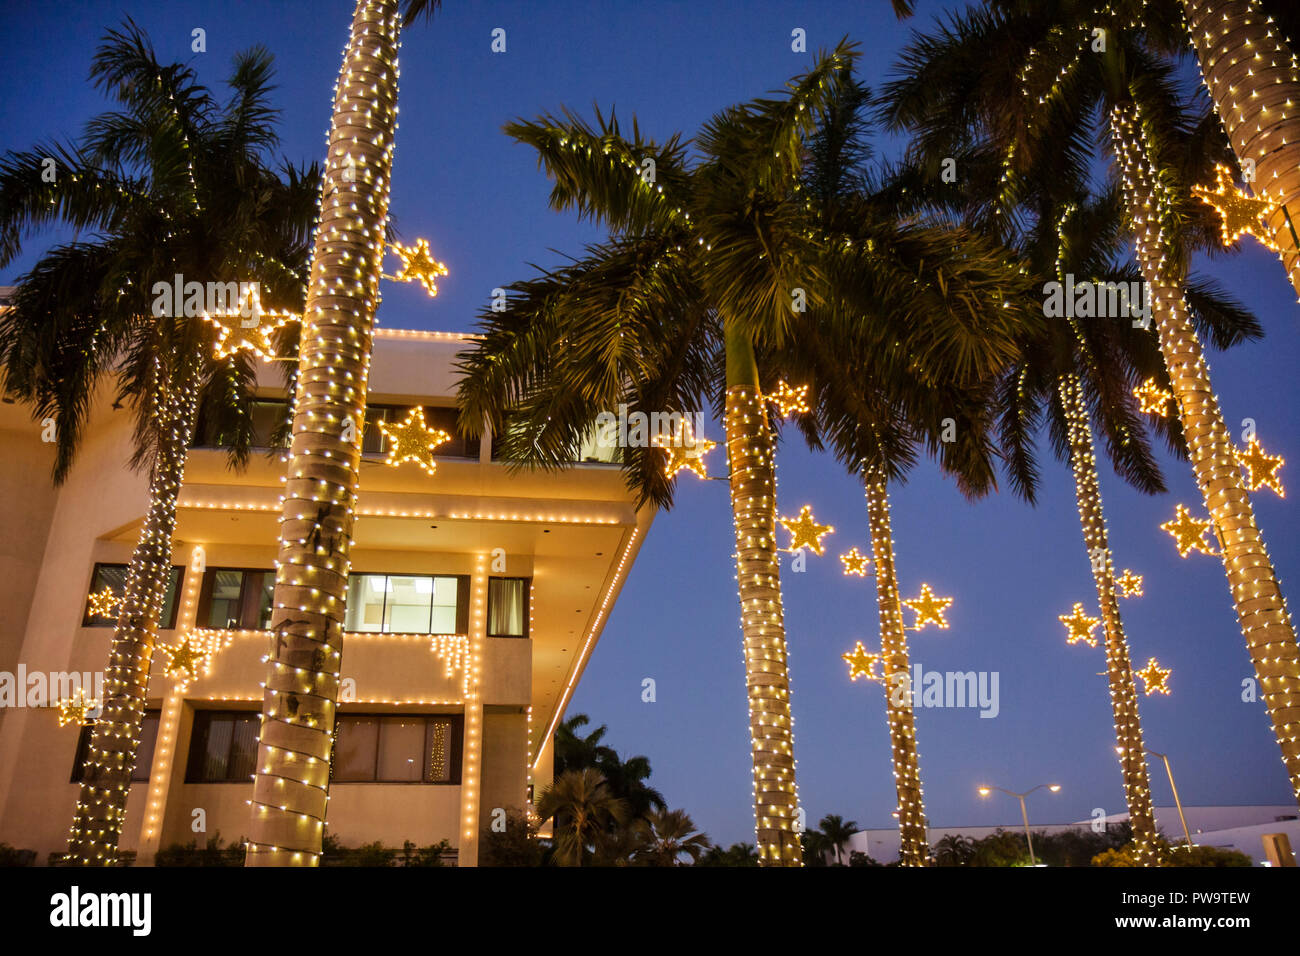 Miami Beach Florida,City Hall,building,palm trees,dusk,evening,Christmas lights,winter holiday,season,seasonal,decoration,star,frond,tropical,traditio Stock Photo